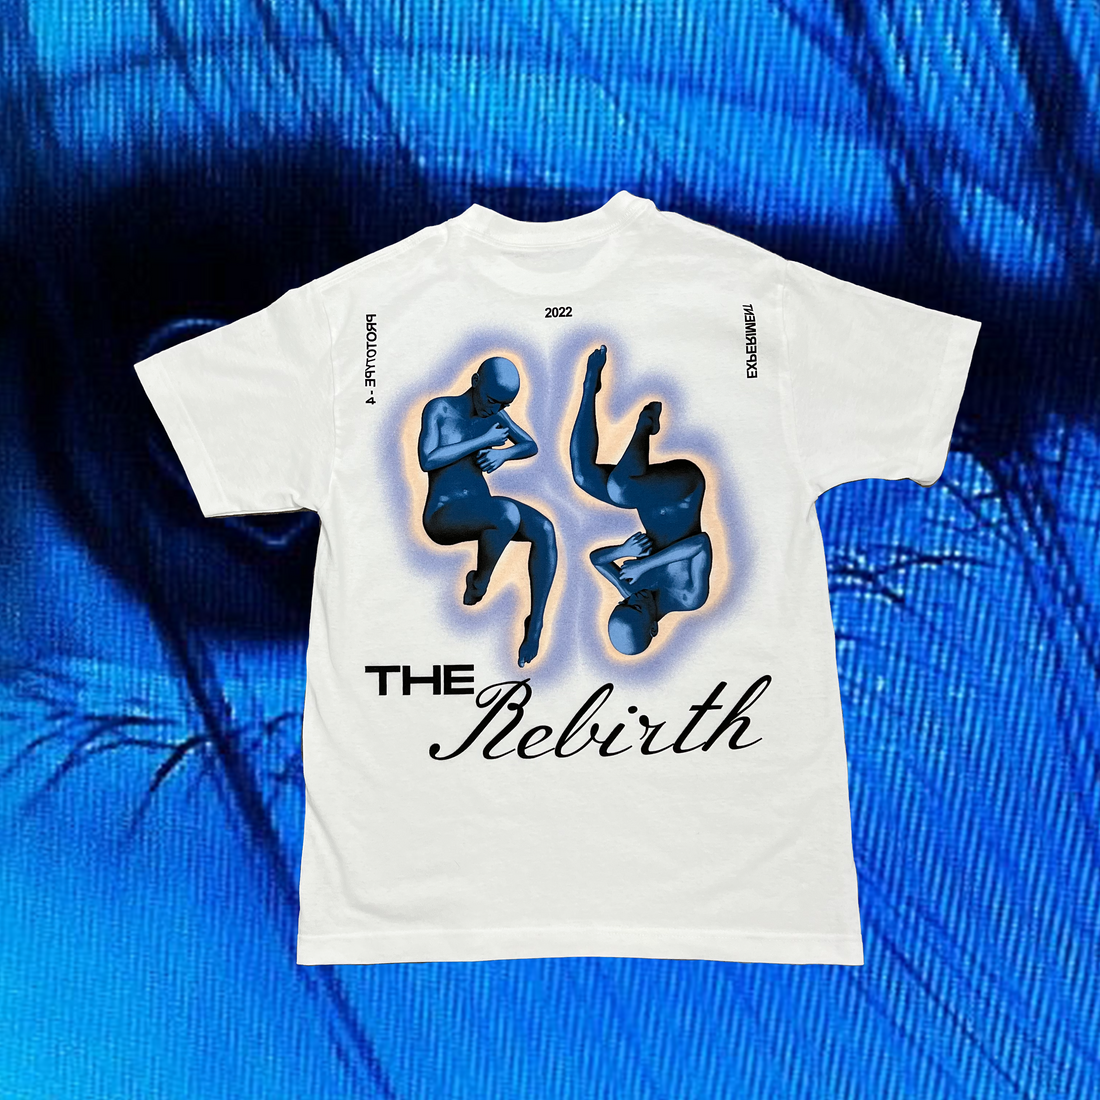 The Rebirth T-Shirt